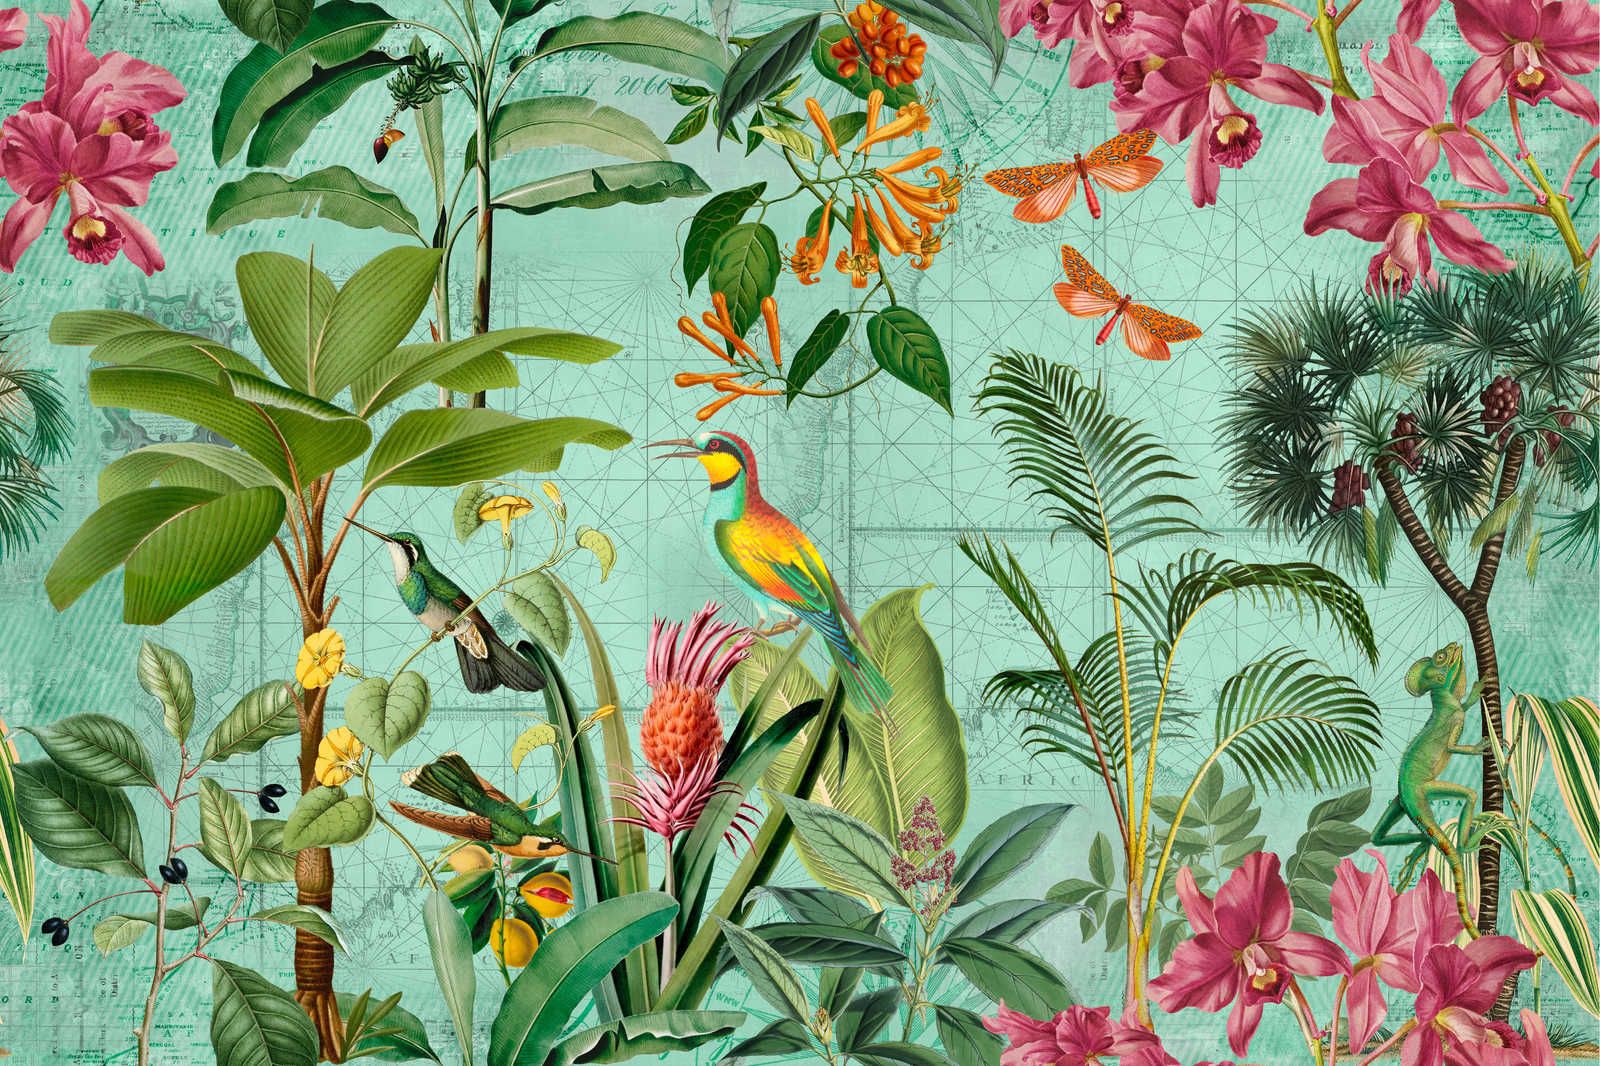             Buntes Dschungel Leinwandbild mit Bäumen, Blüten & Tieren – 1,20 m x 0,80 m
        